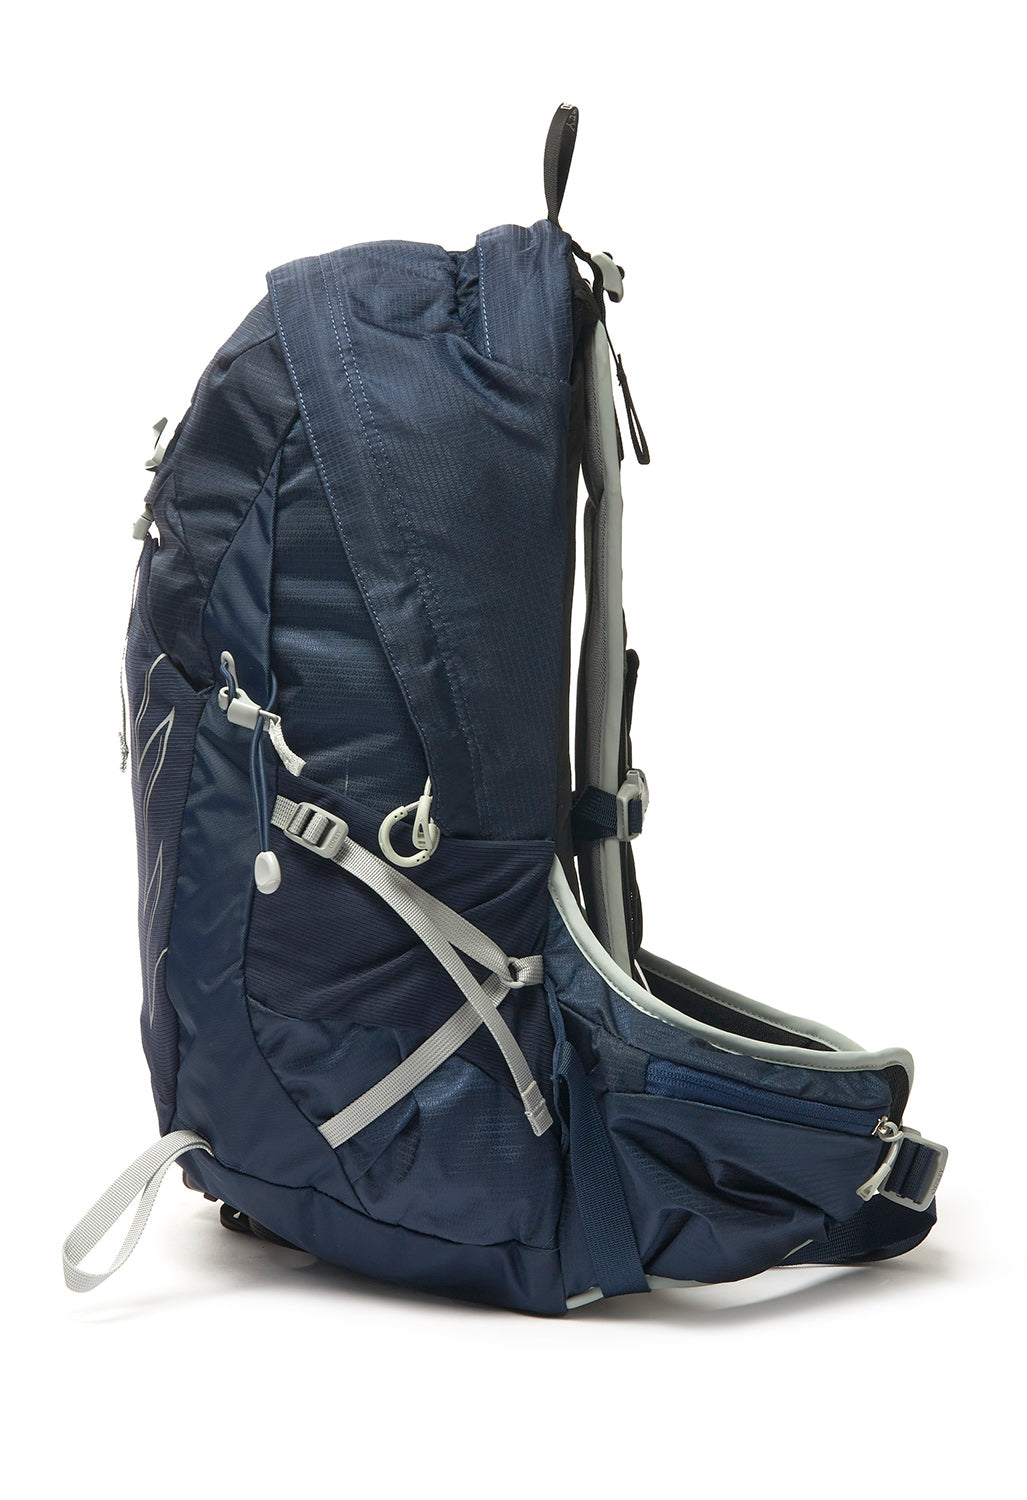 Osprey Talon 22 Backpack - Ceramic Blue